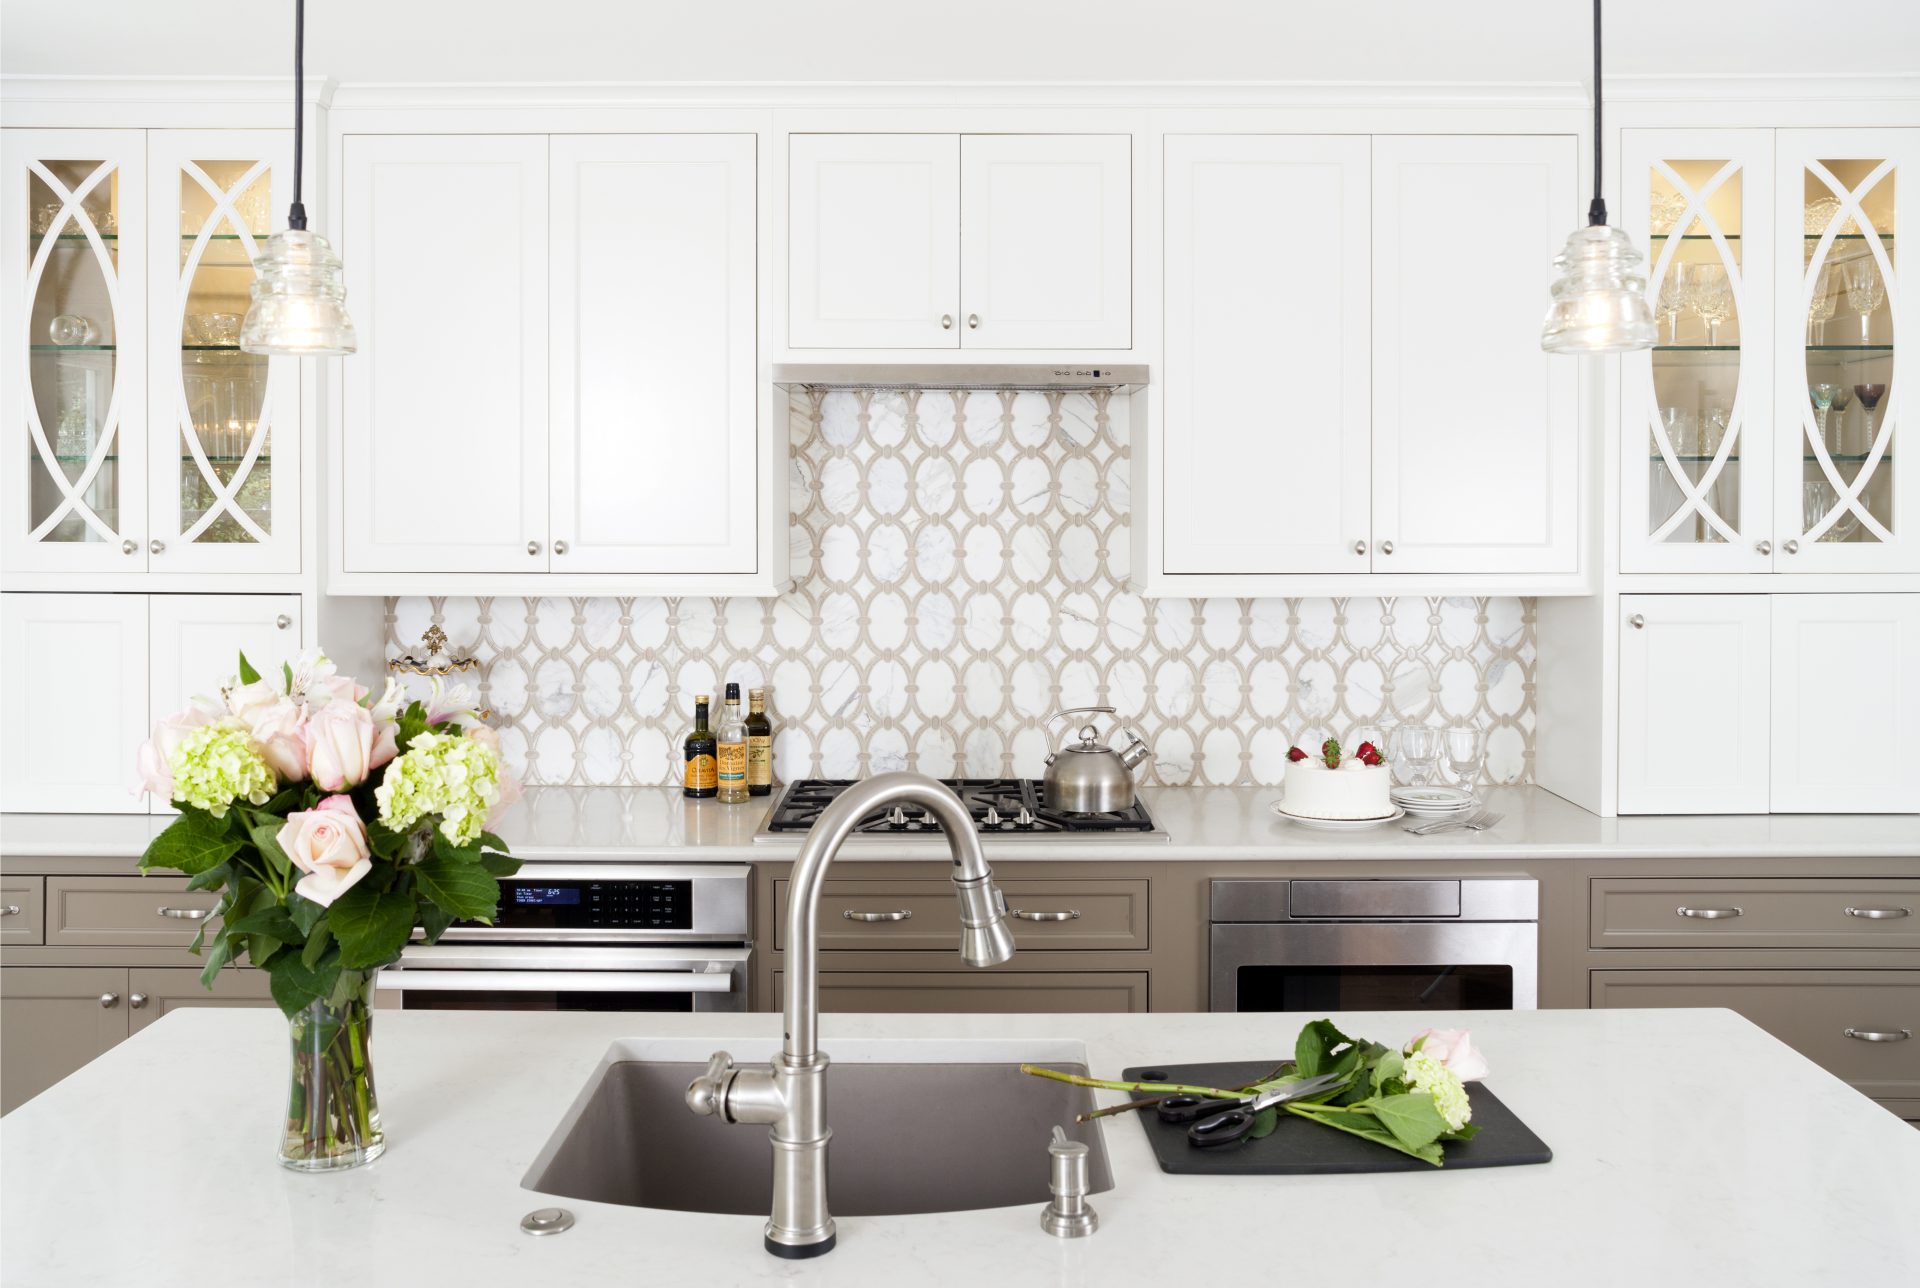 White kitchen with patterned backsplash